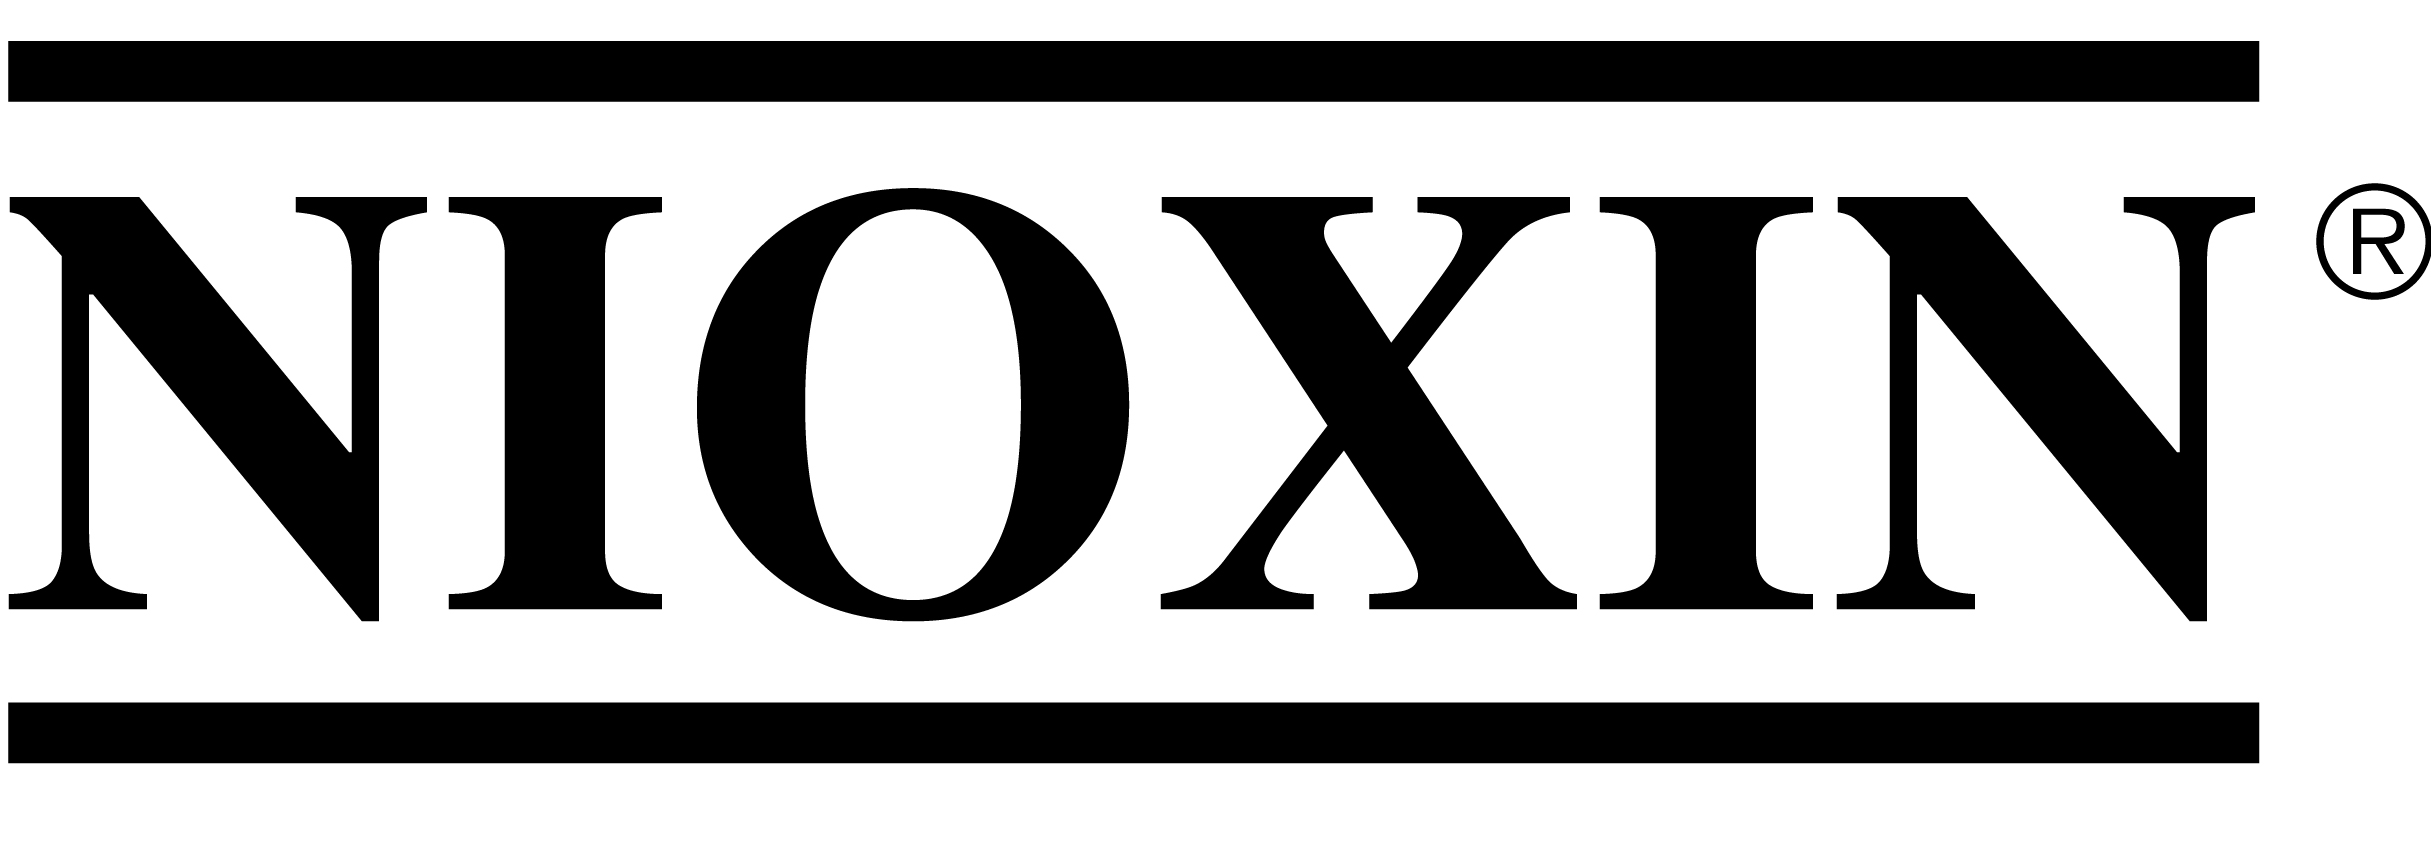 Nioxin Logo photo - 1